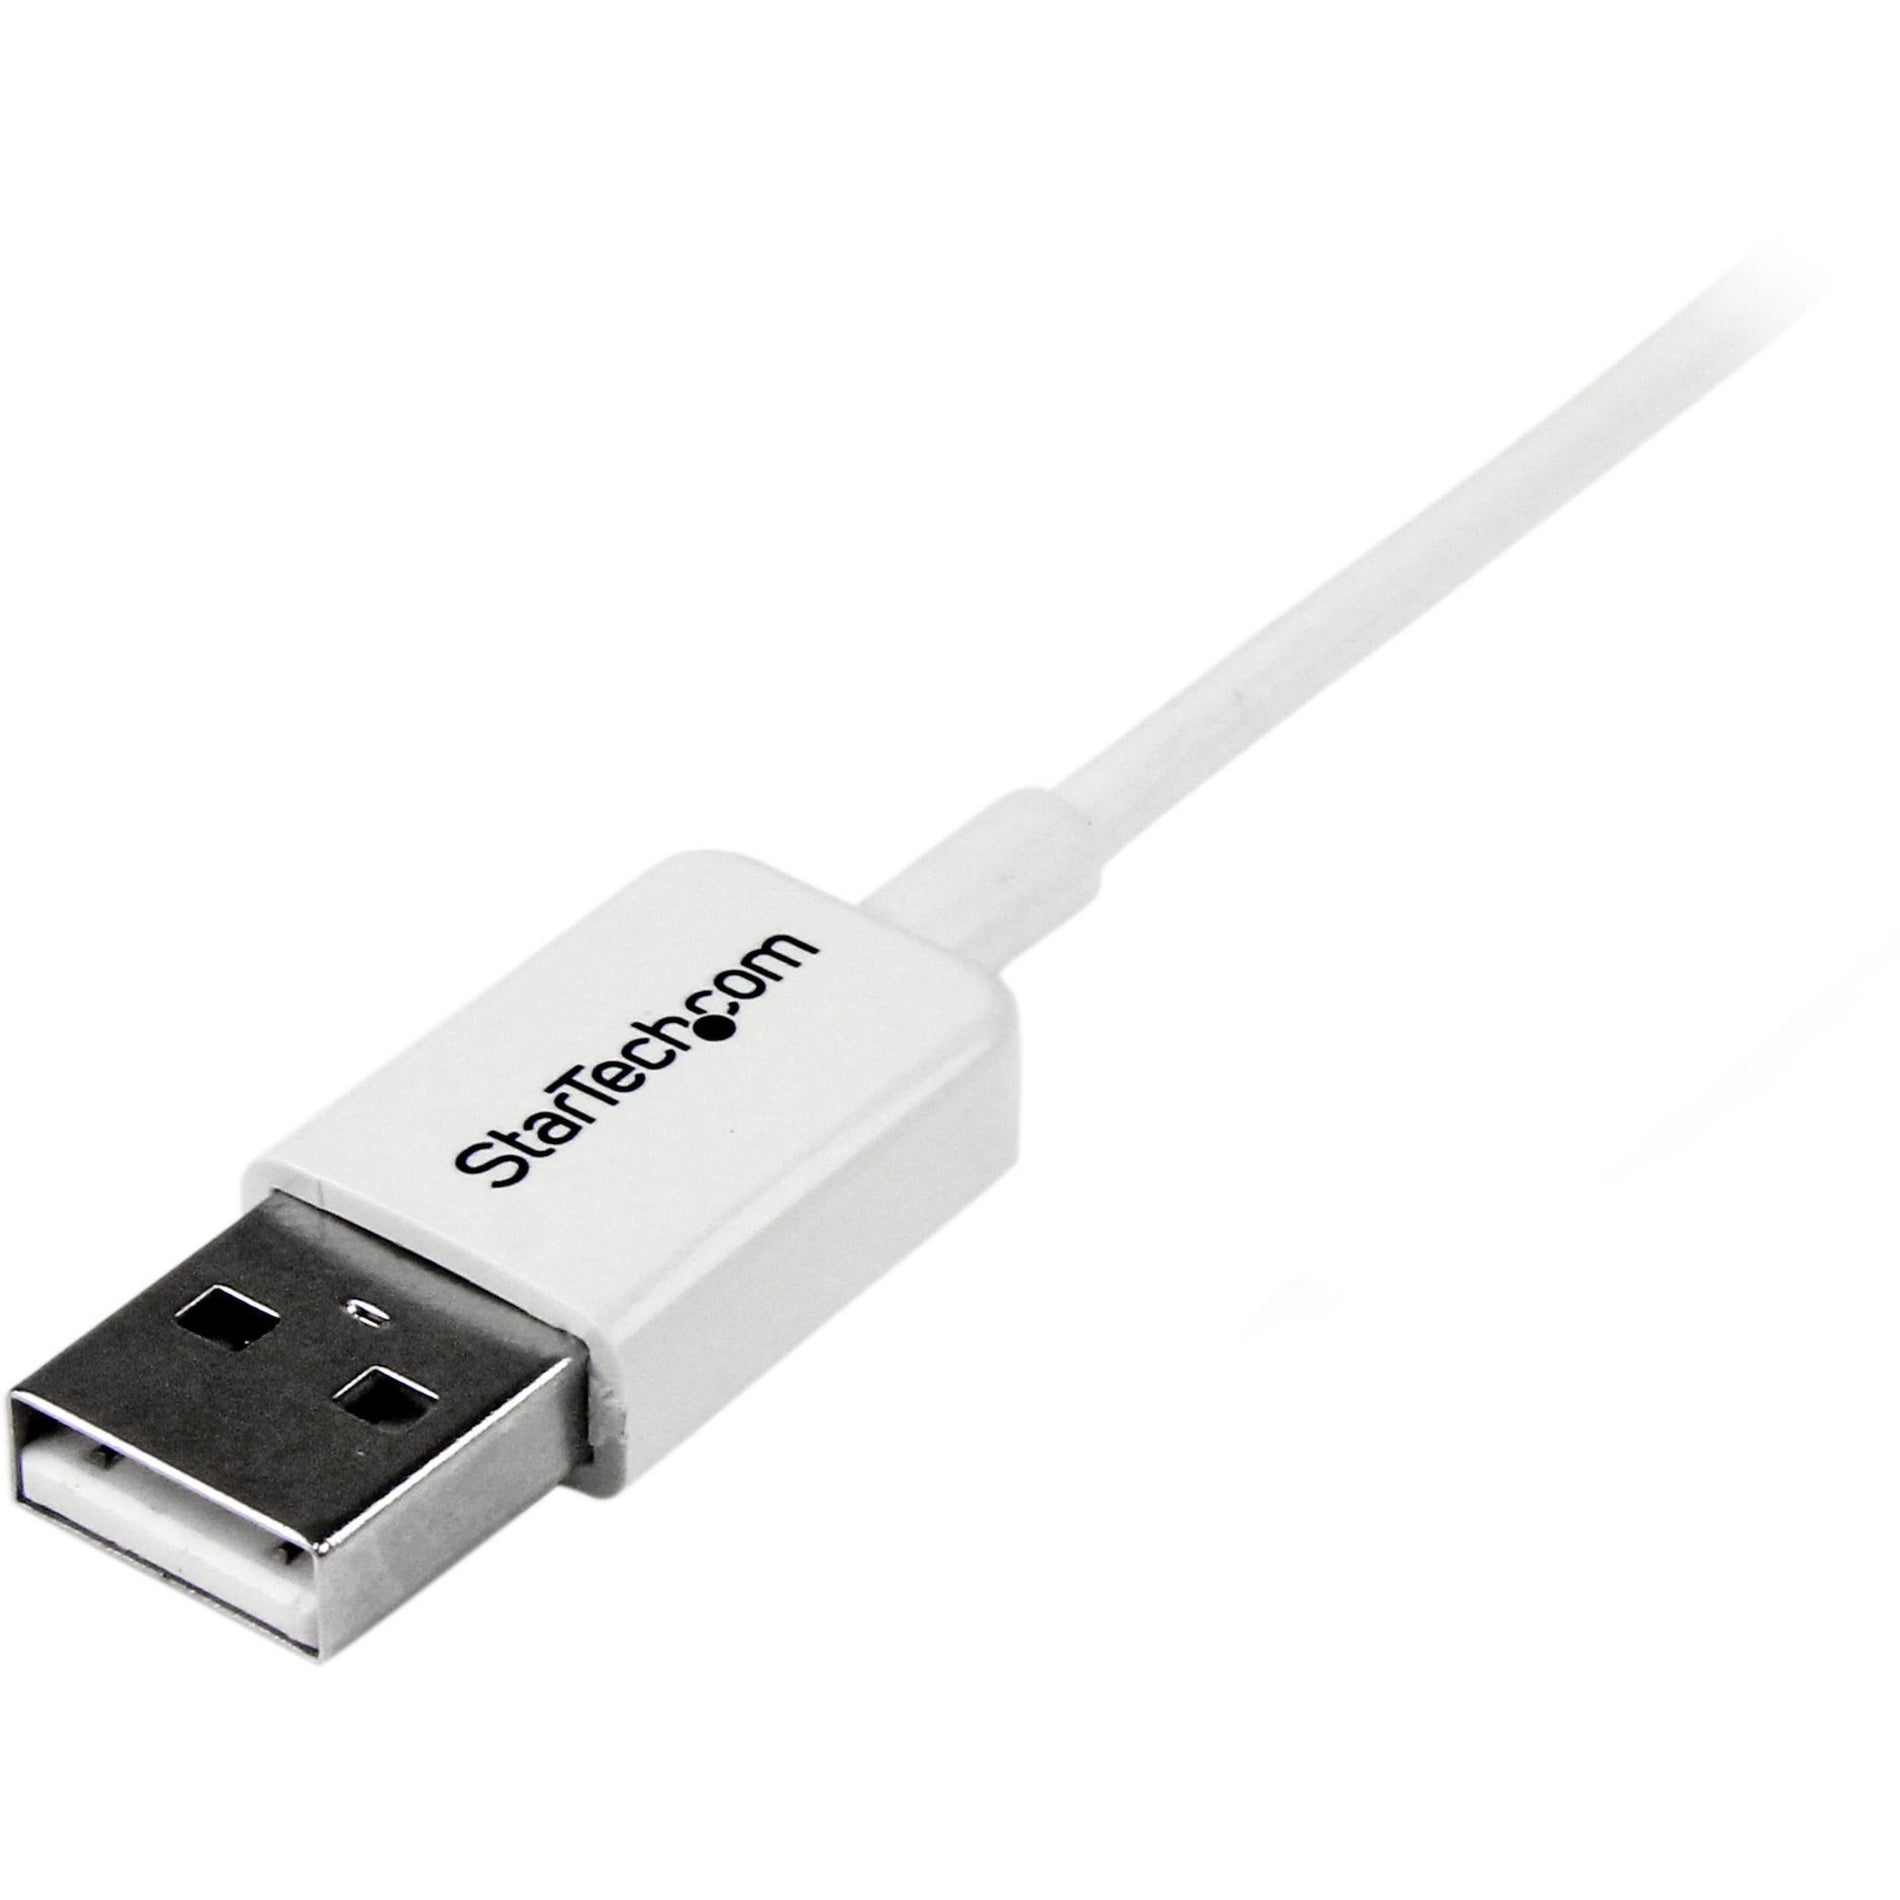 StarTech.com USBPAUB50CMW 0.5m 白色 微型 USB 电缆 - A 到 Micro B，成型，应变，480 M 比特/秒 数据传输速率  品牌名称: 星美科技